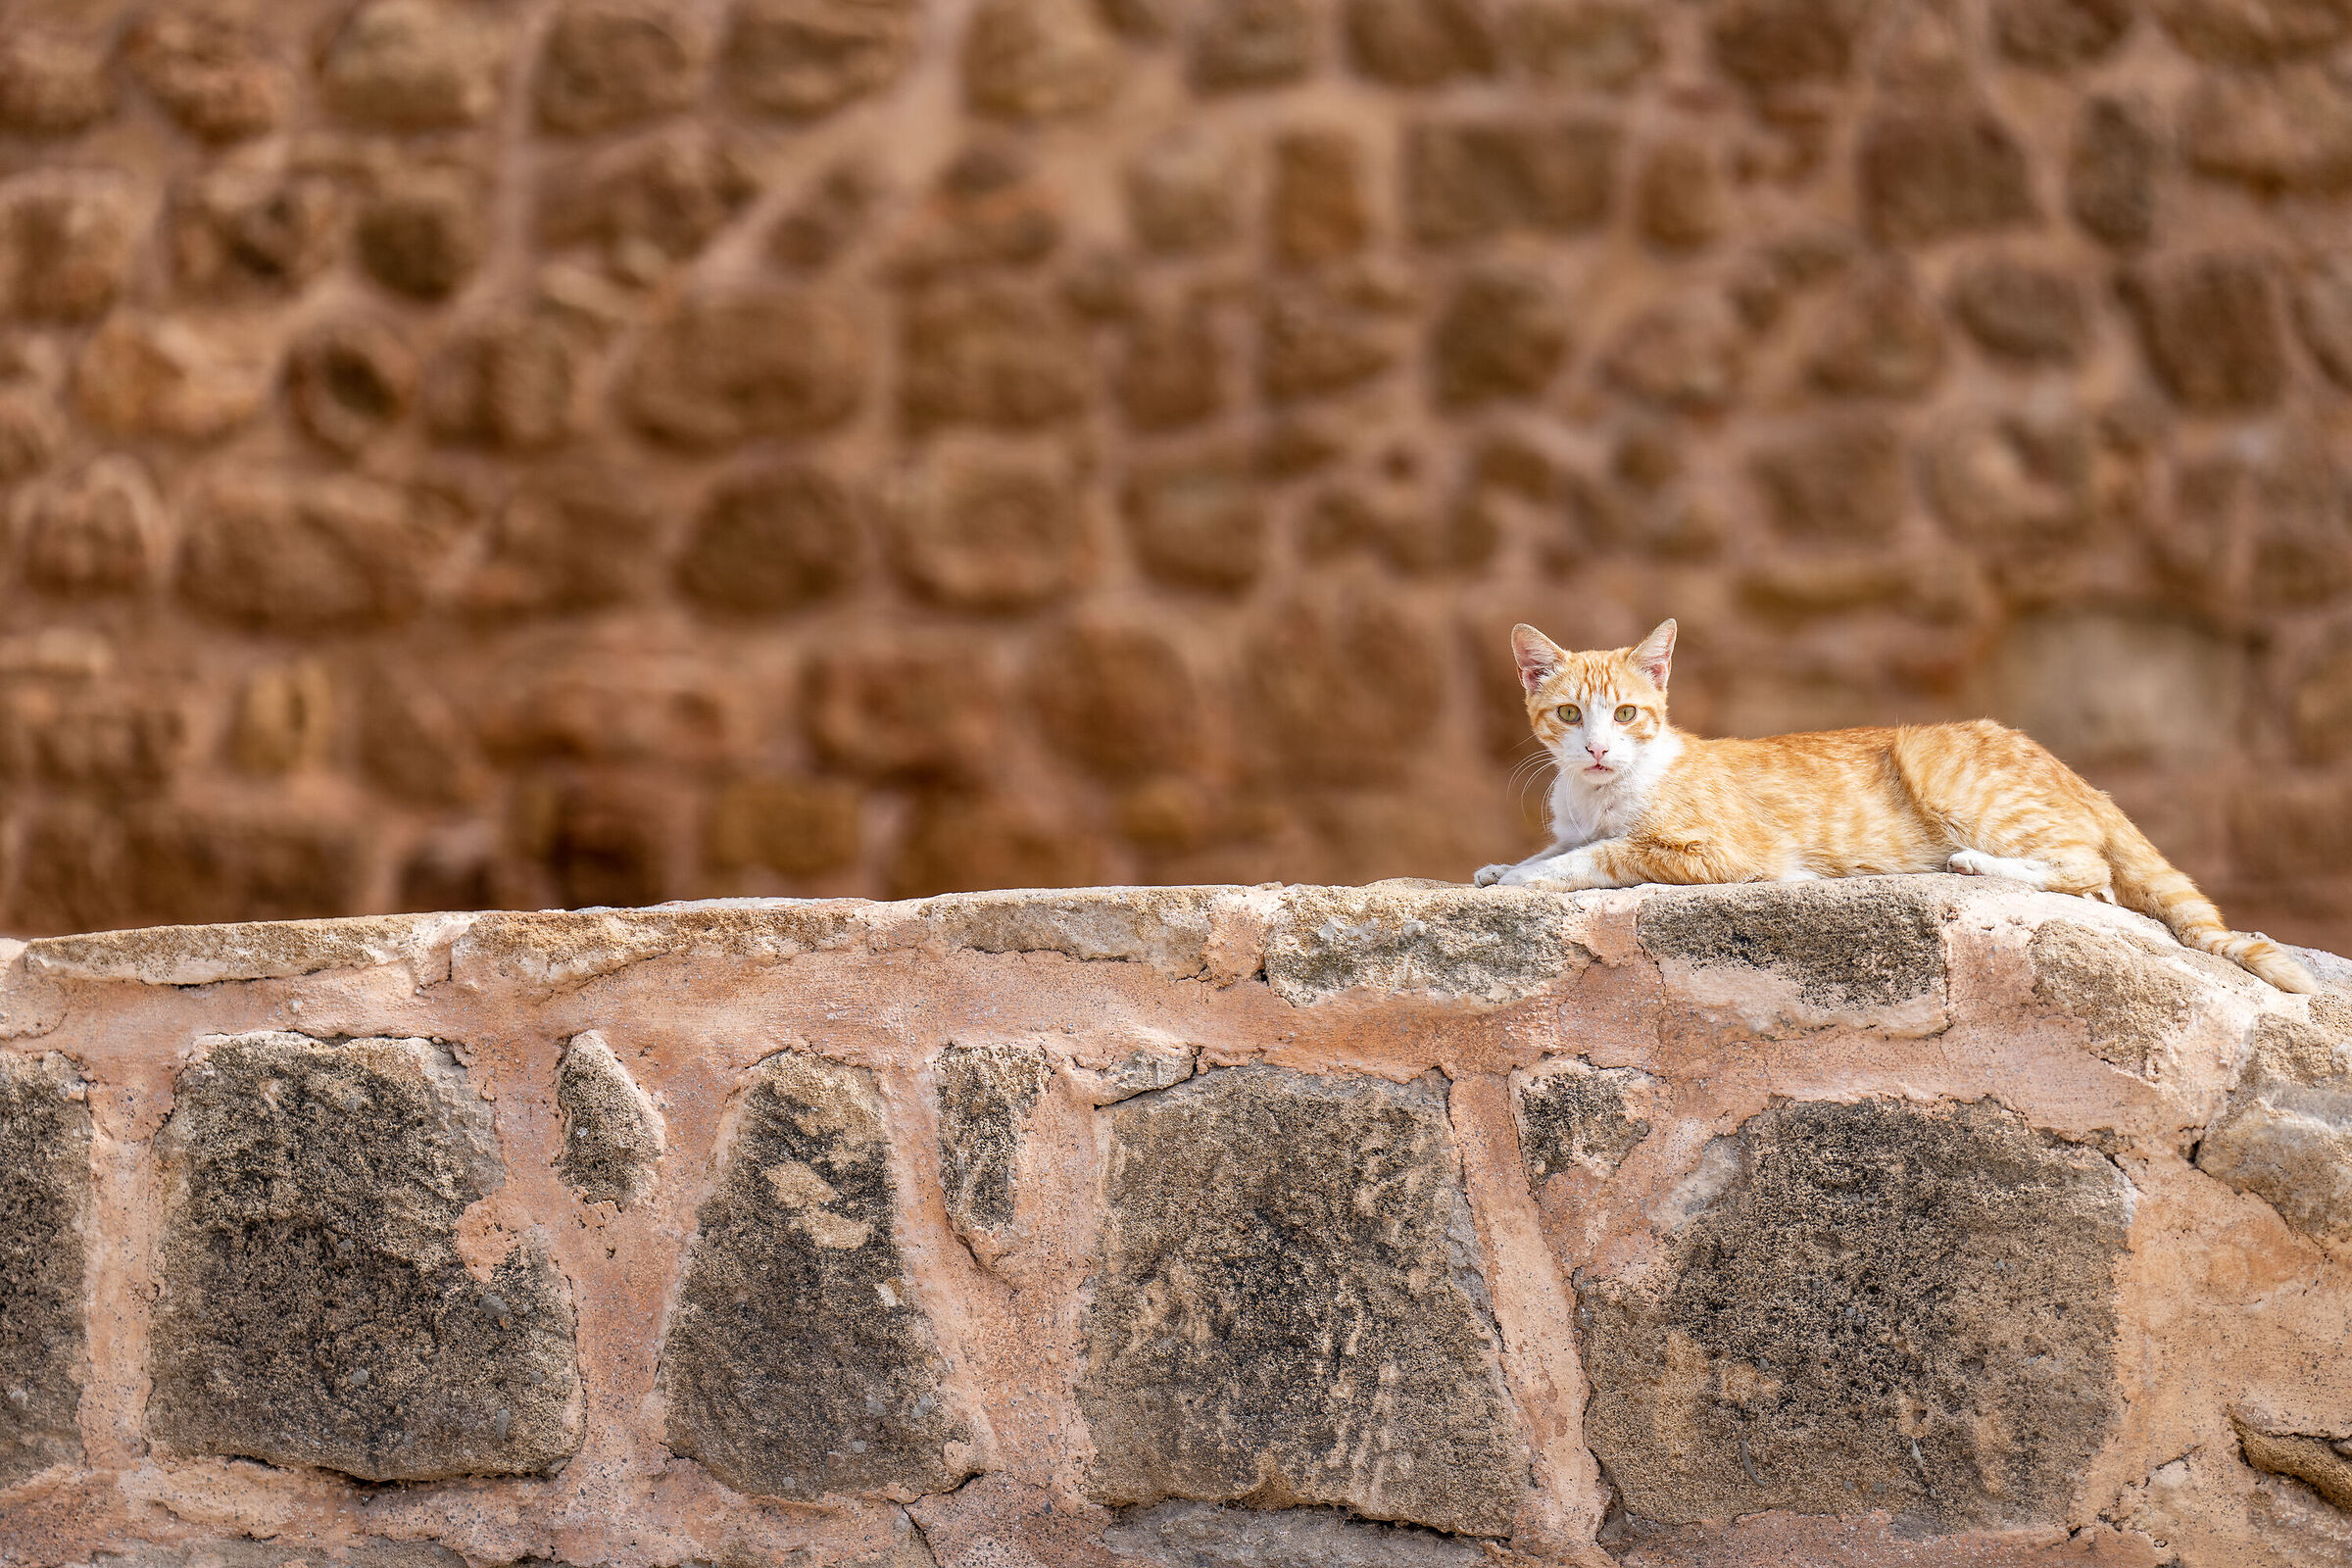 Cats of the Medina of Rabat...